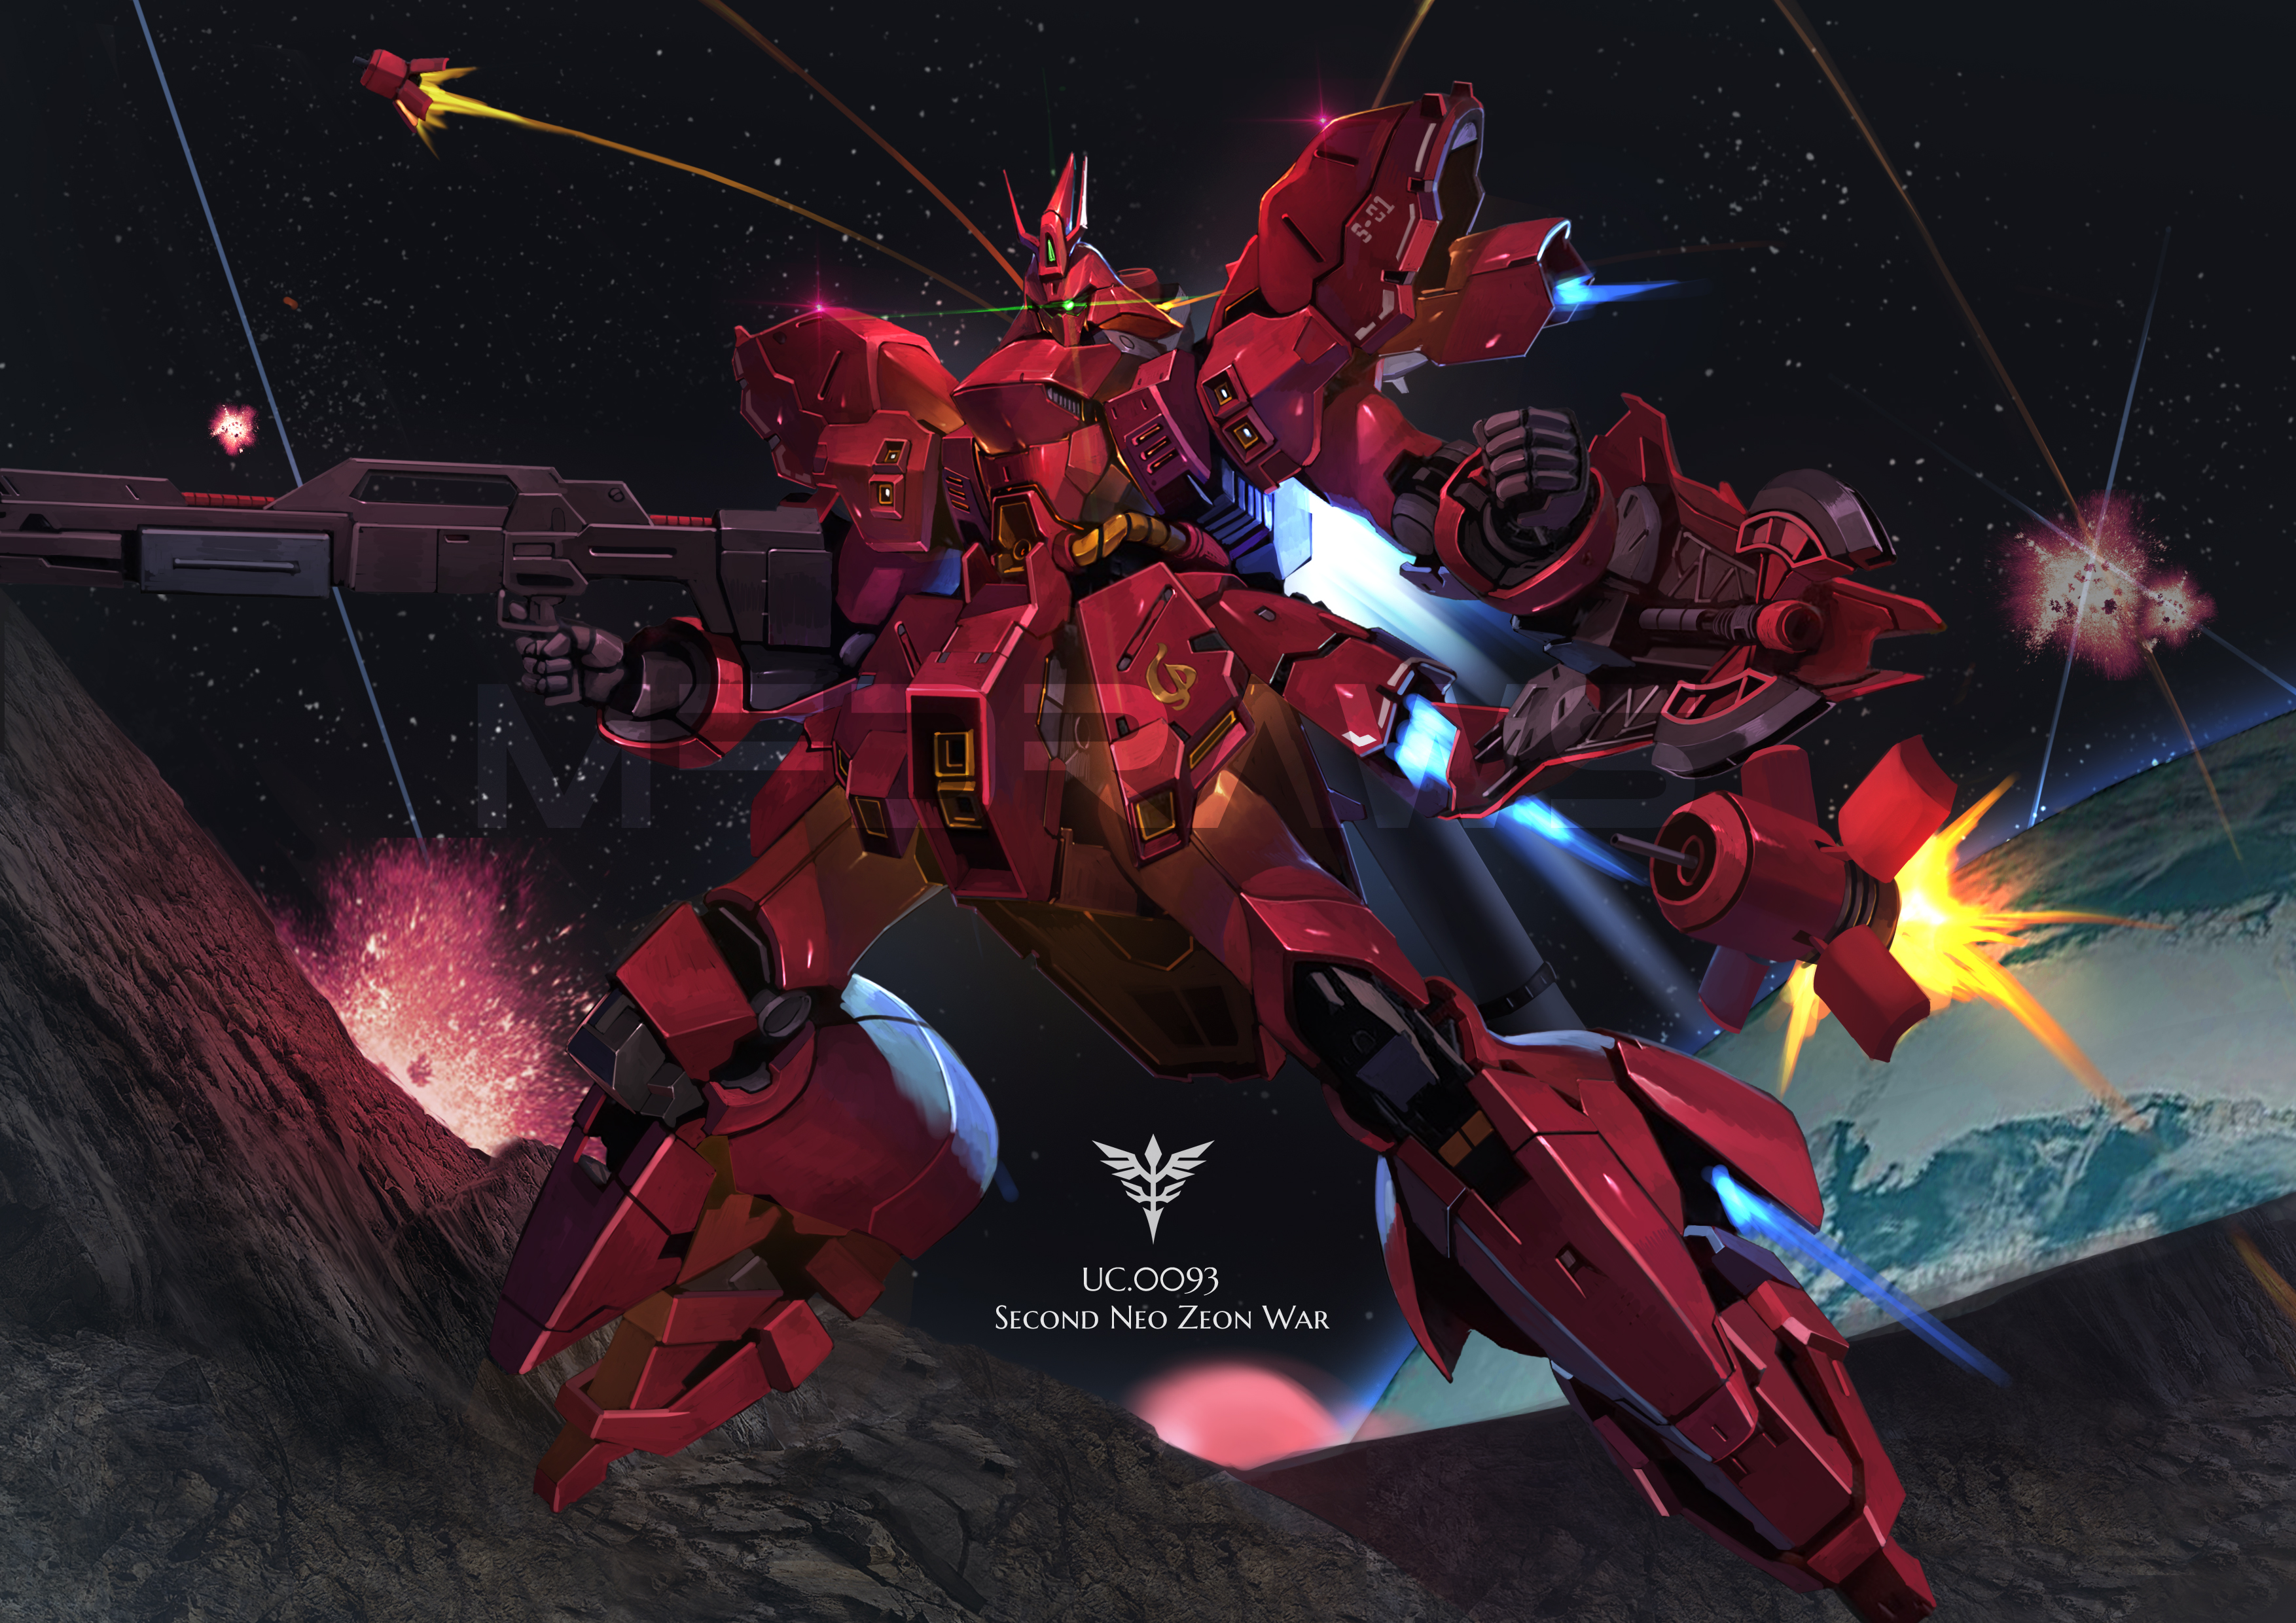 Anime 3508x2480 anime mechs Super Robot Taisen Mobile Suit Gundam Char&#039;s Counterattack Sazabi Mobile Suit artwork digital art fan art